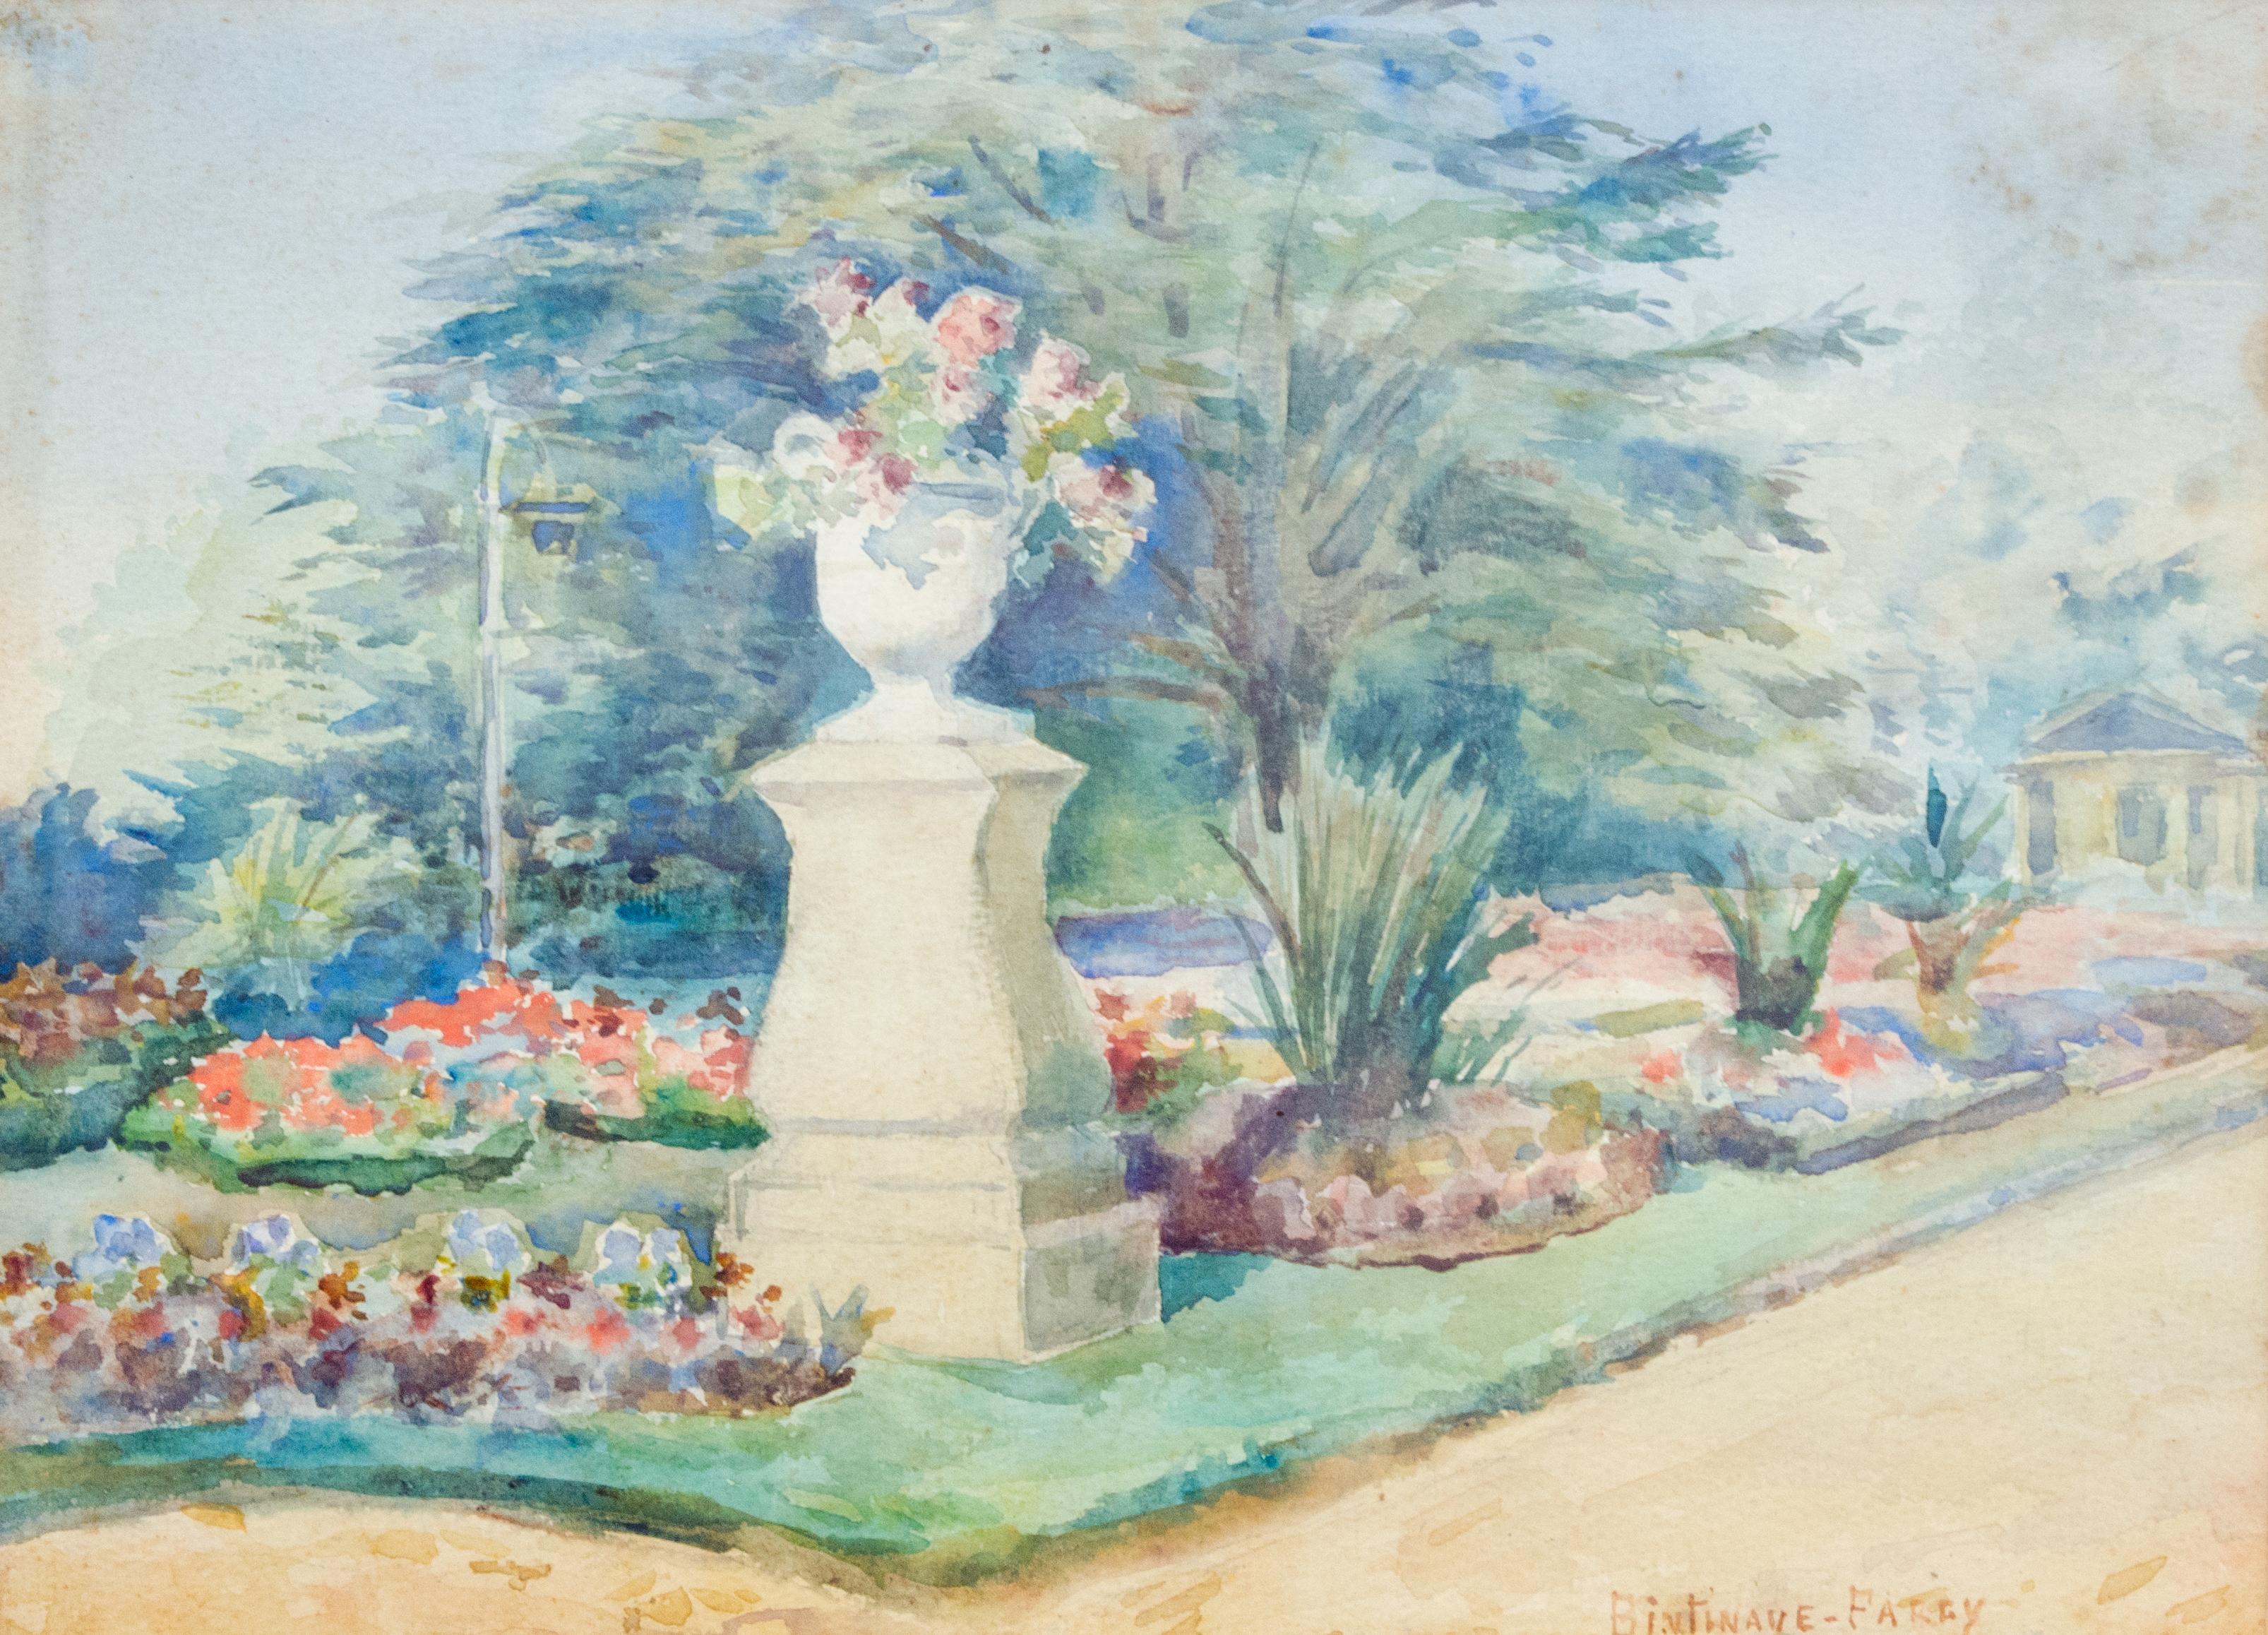 Watercolor Gardenscape Signed Bintinaye - Fatey